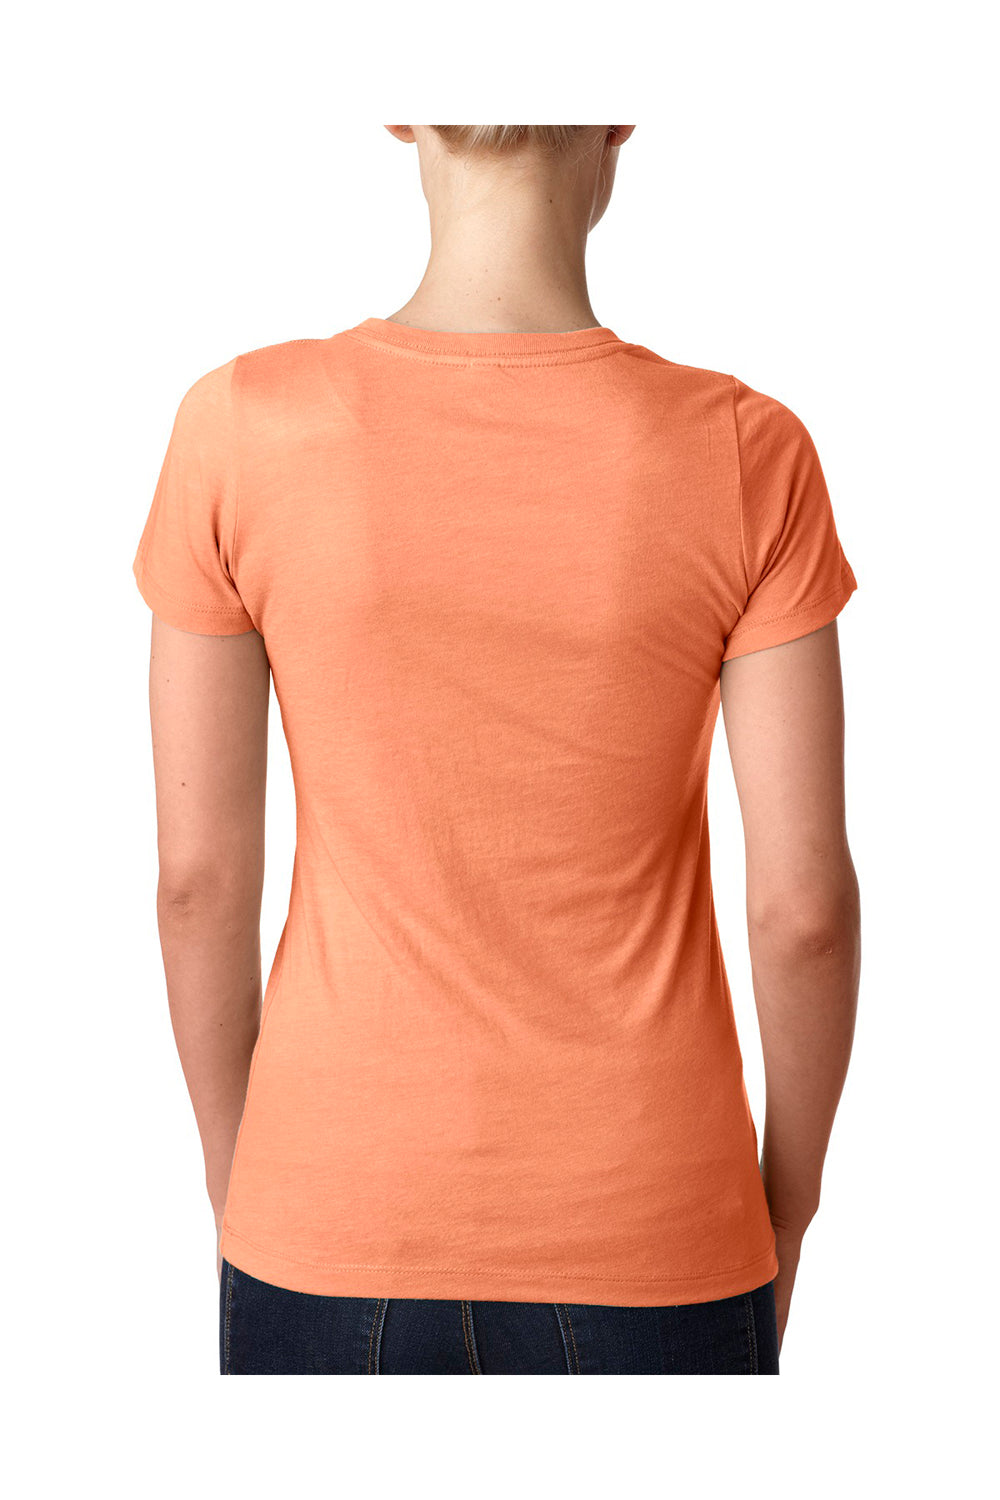 Next Level 6710 Womens Jersey Short Sleeve Crewneck T-Shirt Light Orange Back